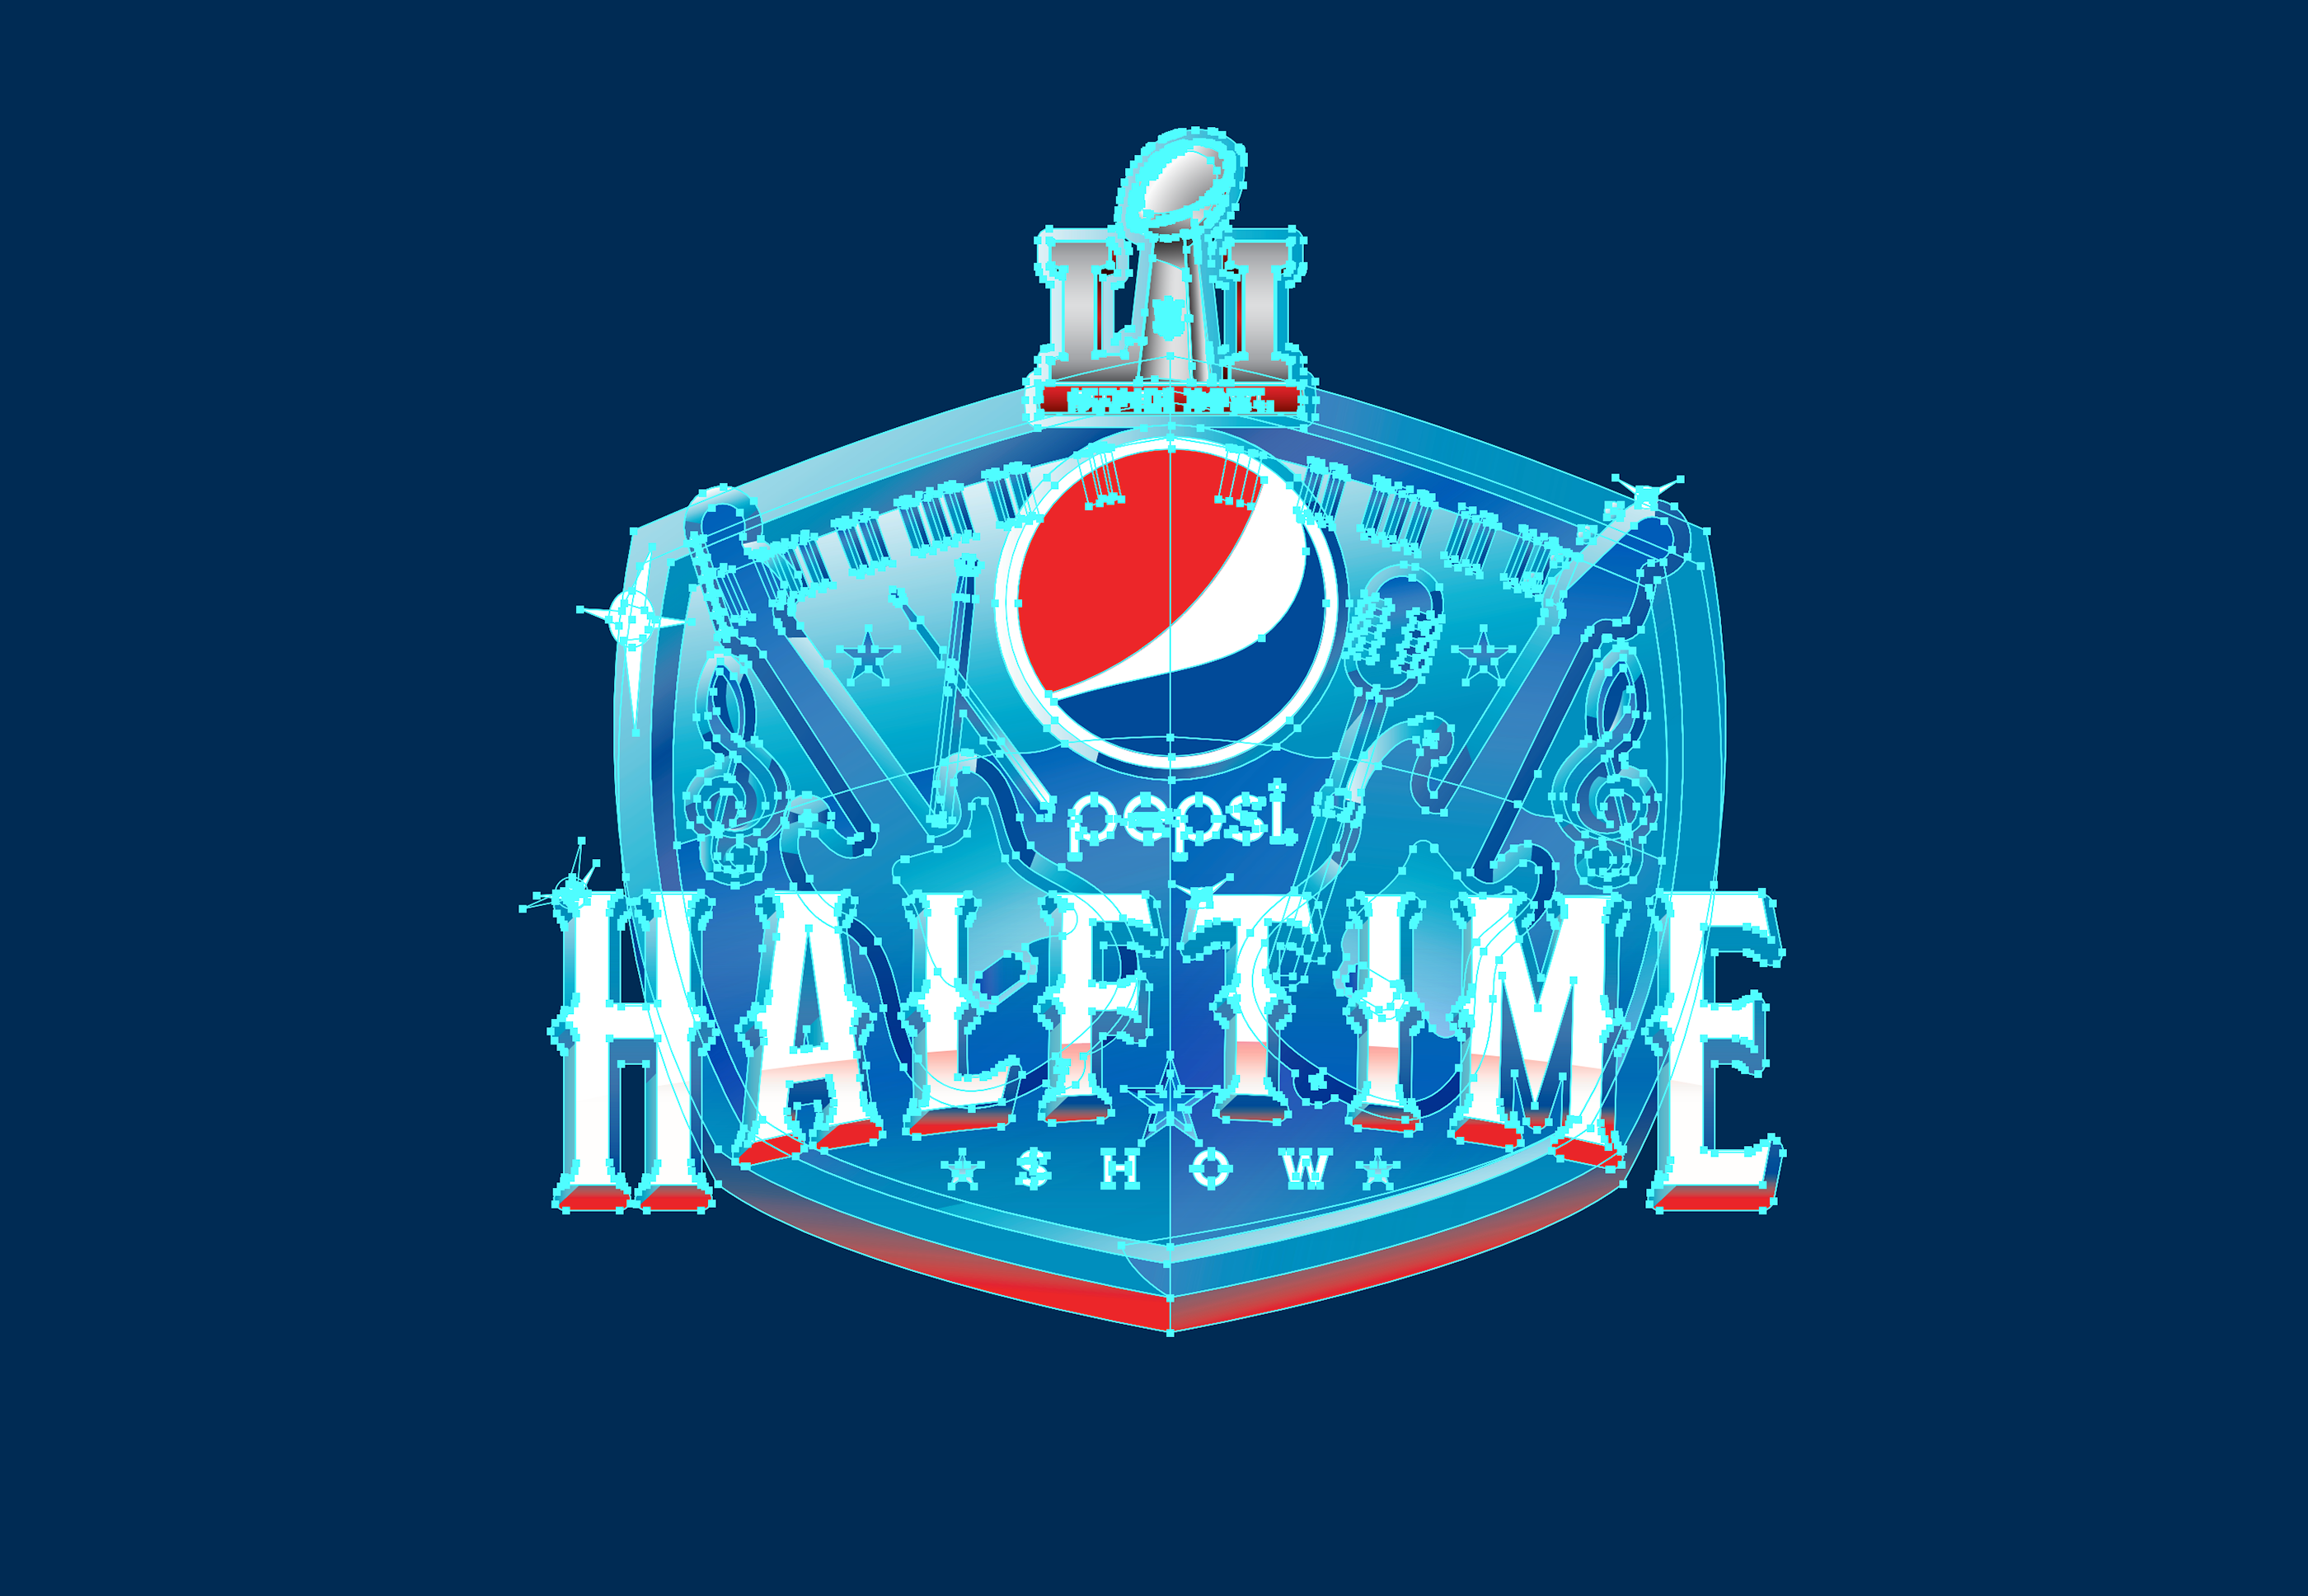 Super bowl show. The Pepsi super Bowl LVI Halftime show. Super Bowl Halftime show логотип. Super Bowl лого. Pepsi super Bowl.